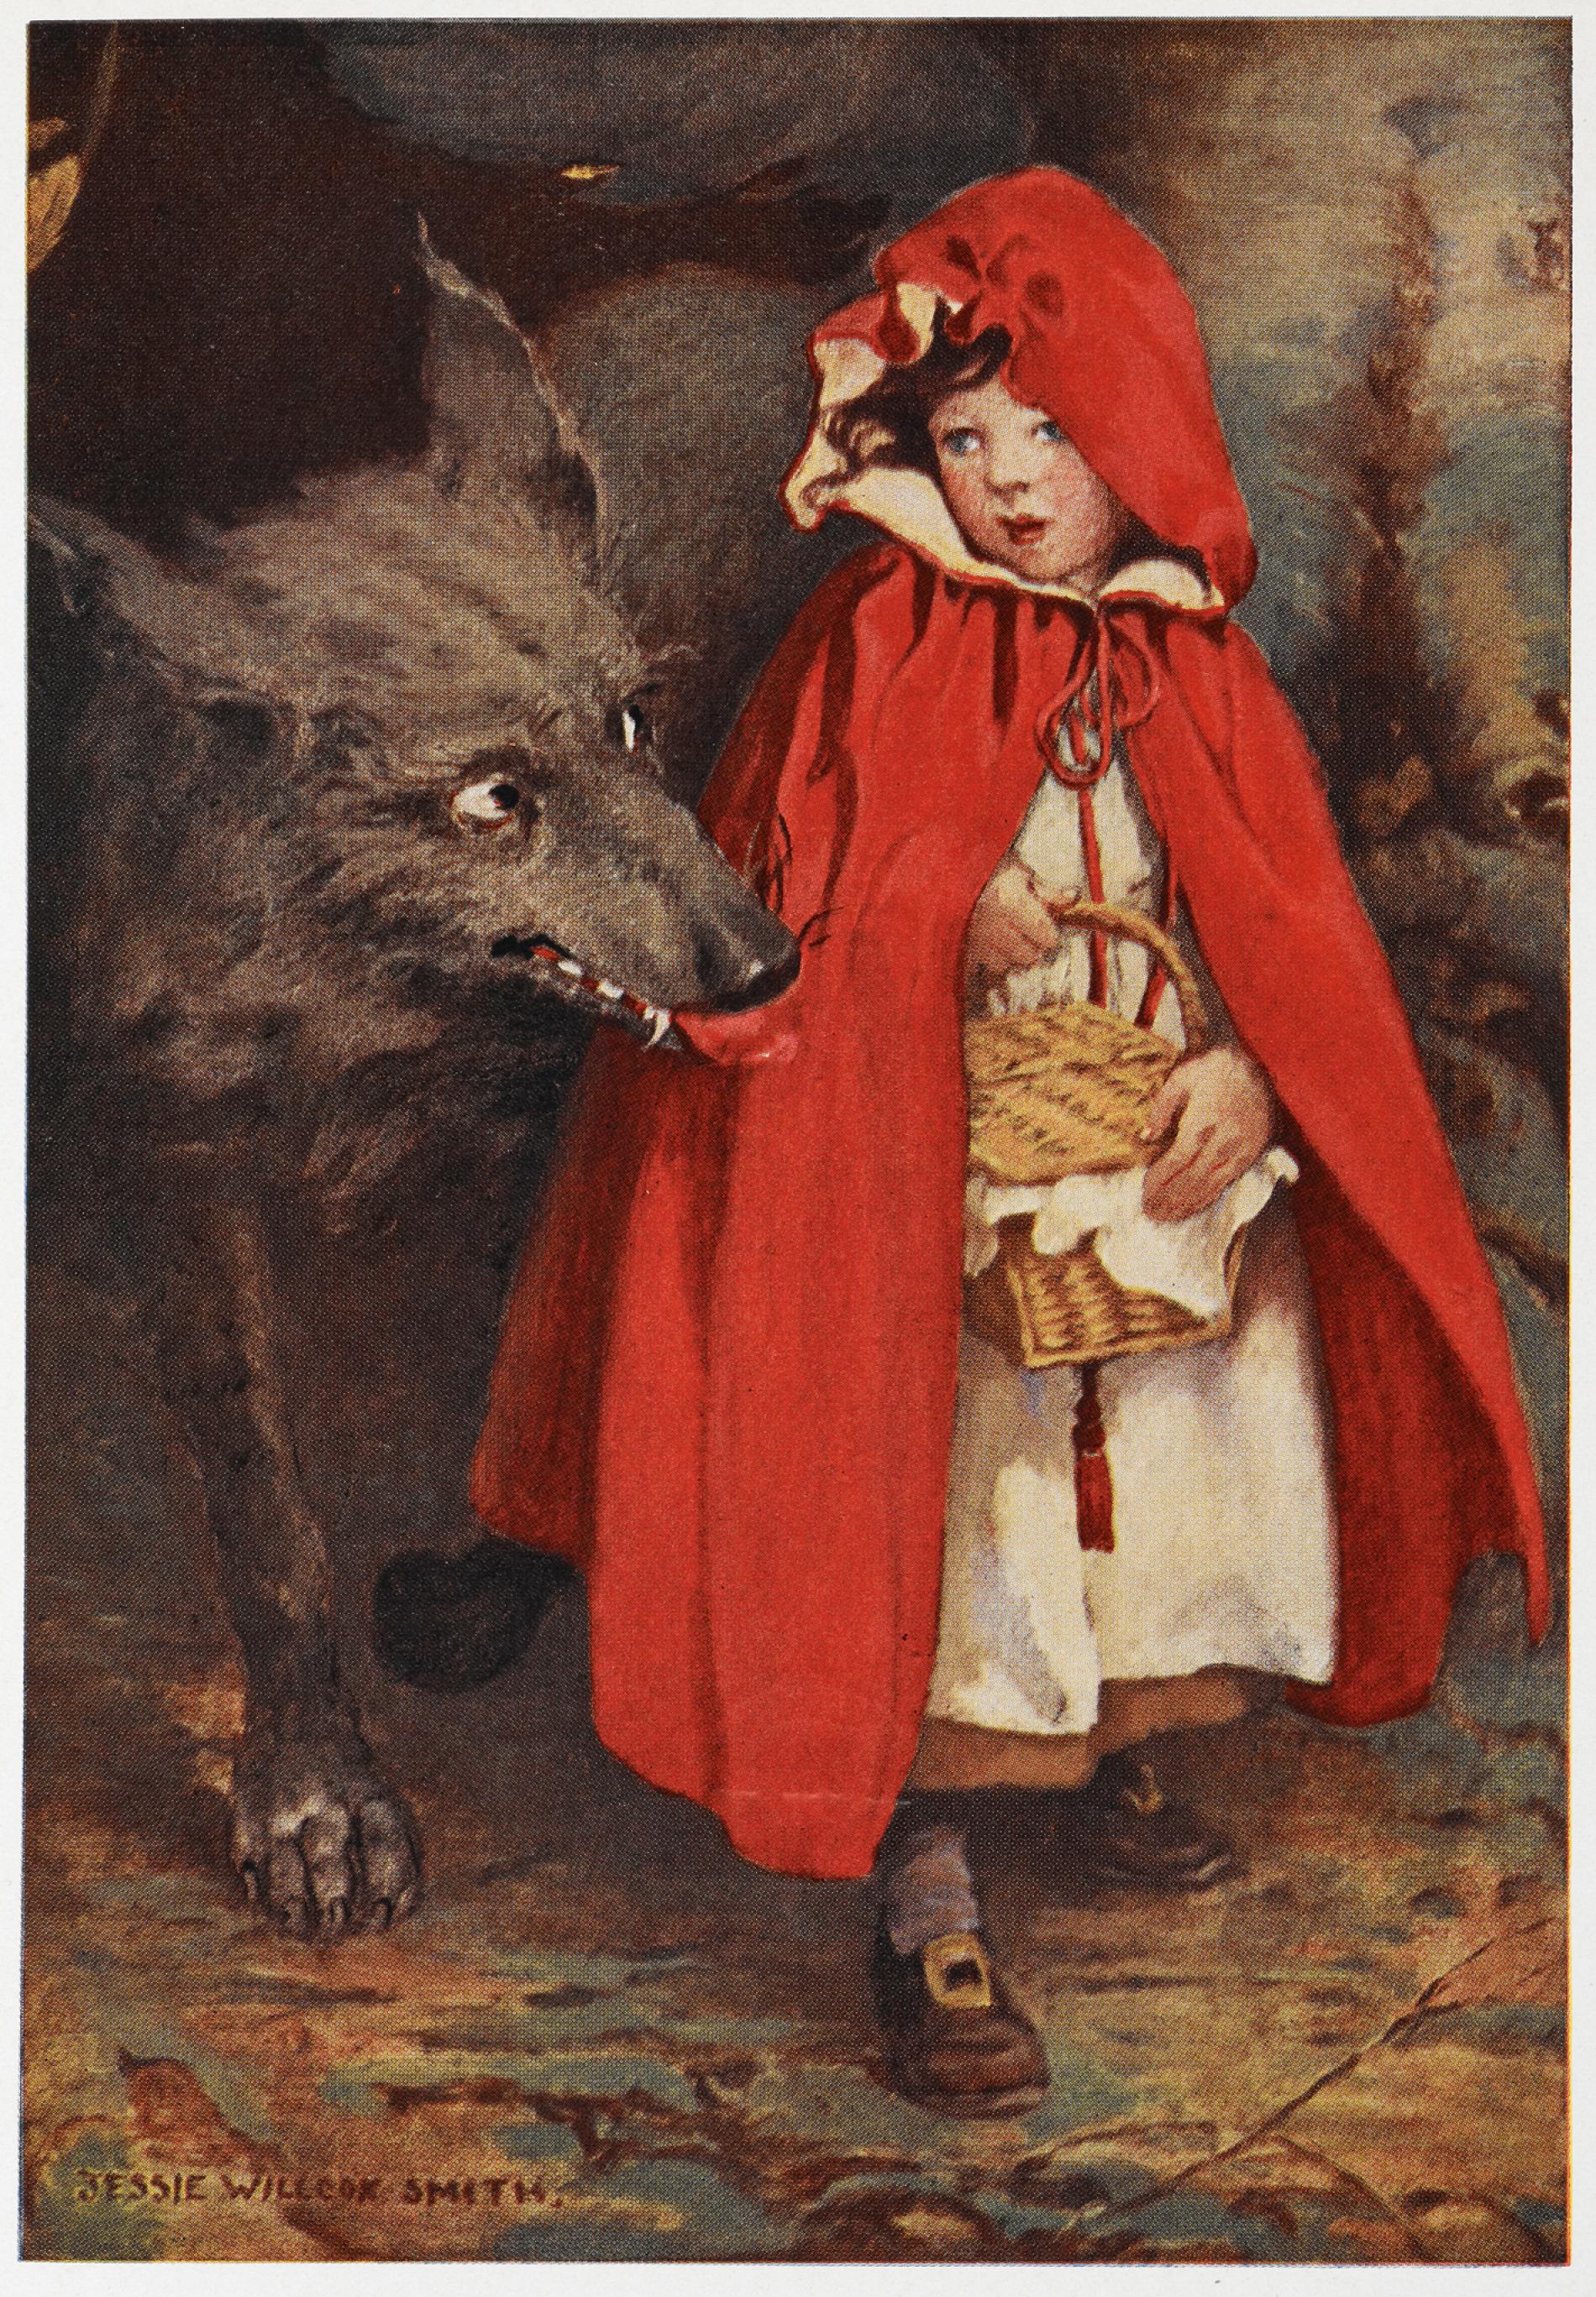 Little_Red_Riding_Hood_-_J._W._Smith.jpg